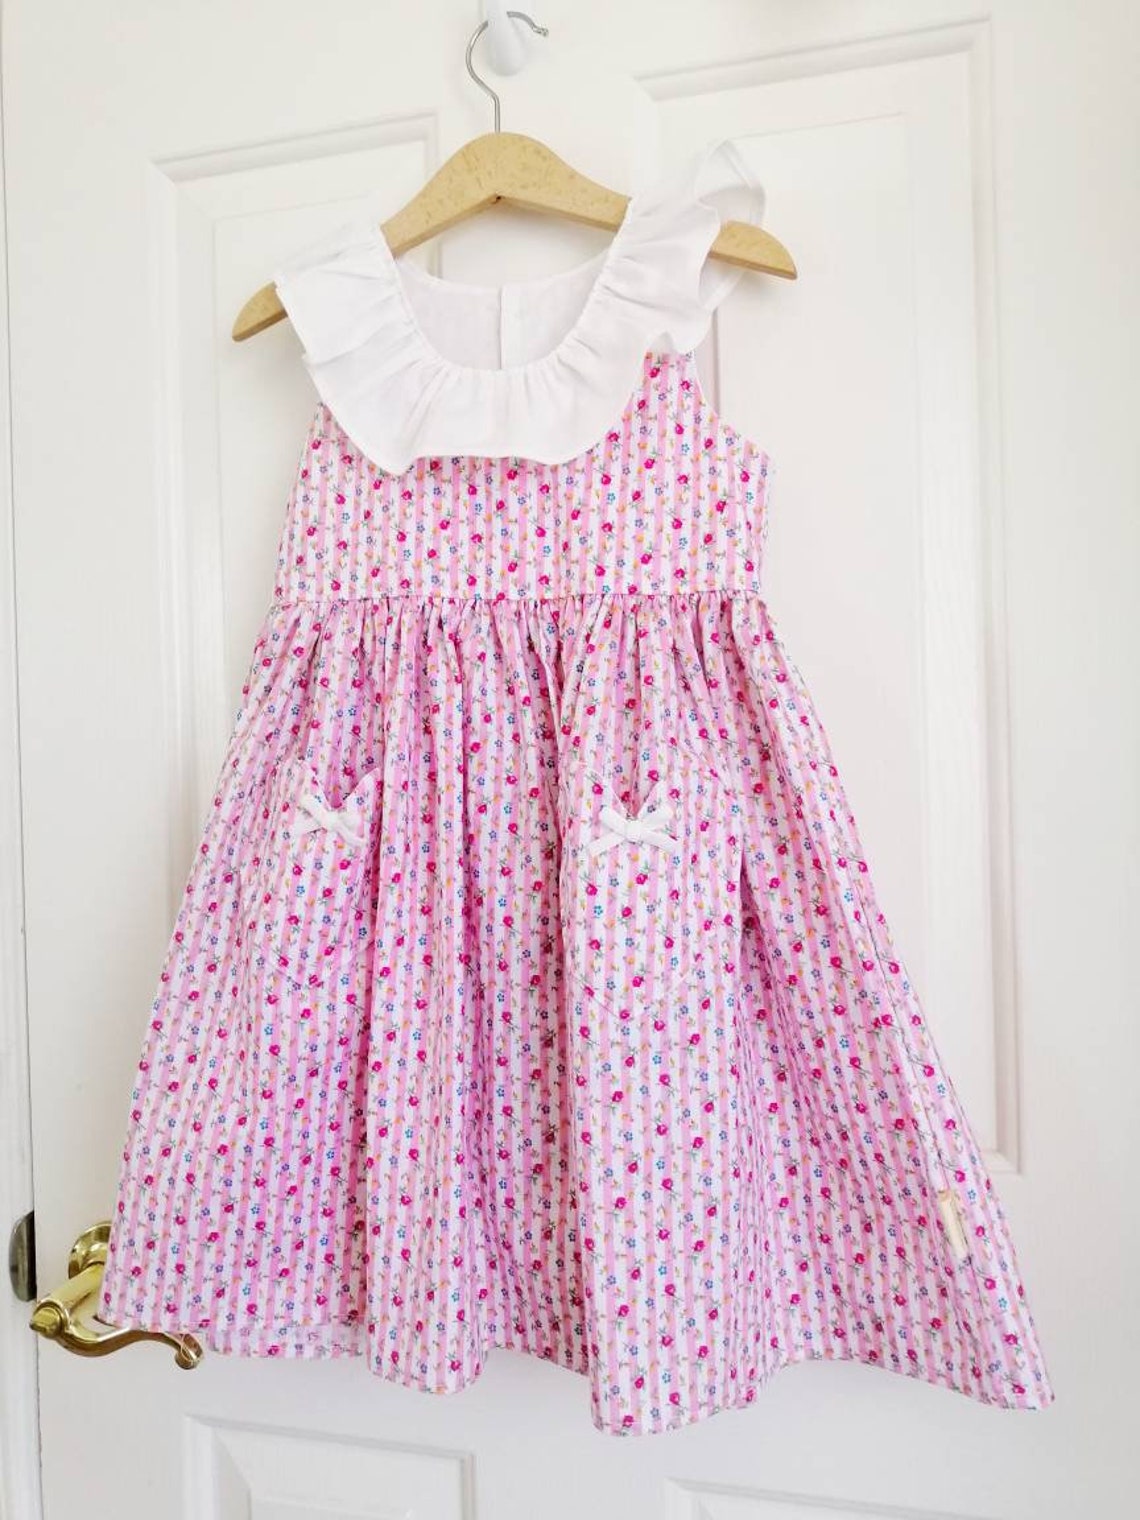 Handmade cottage chic flora girls dress toddler dress | Etsy